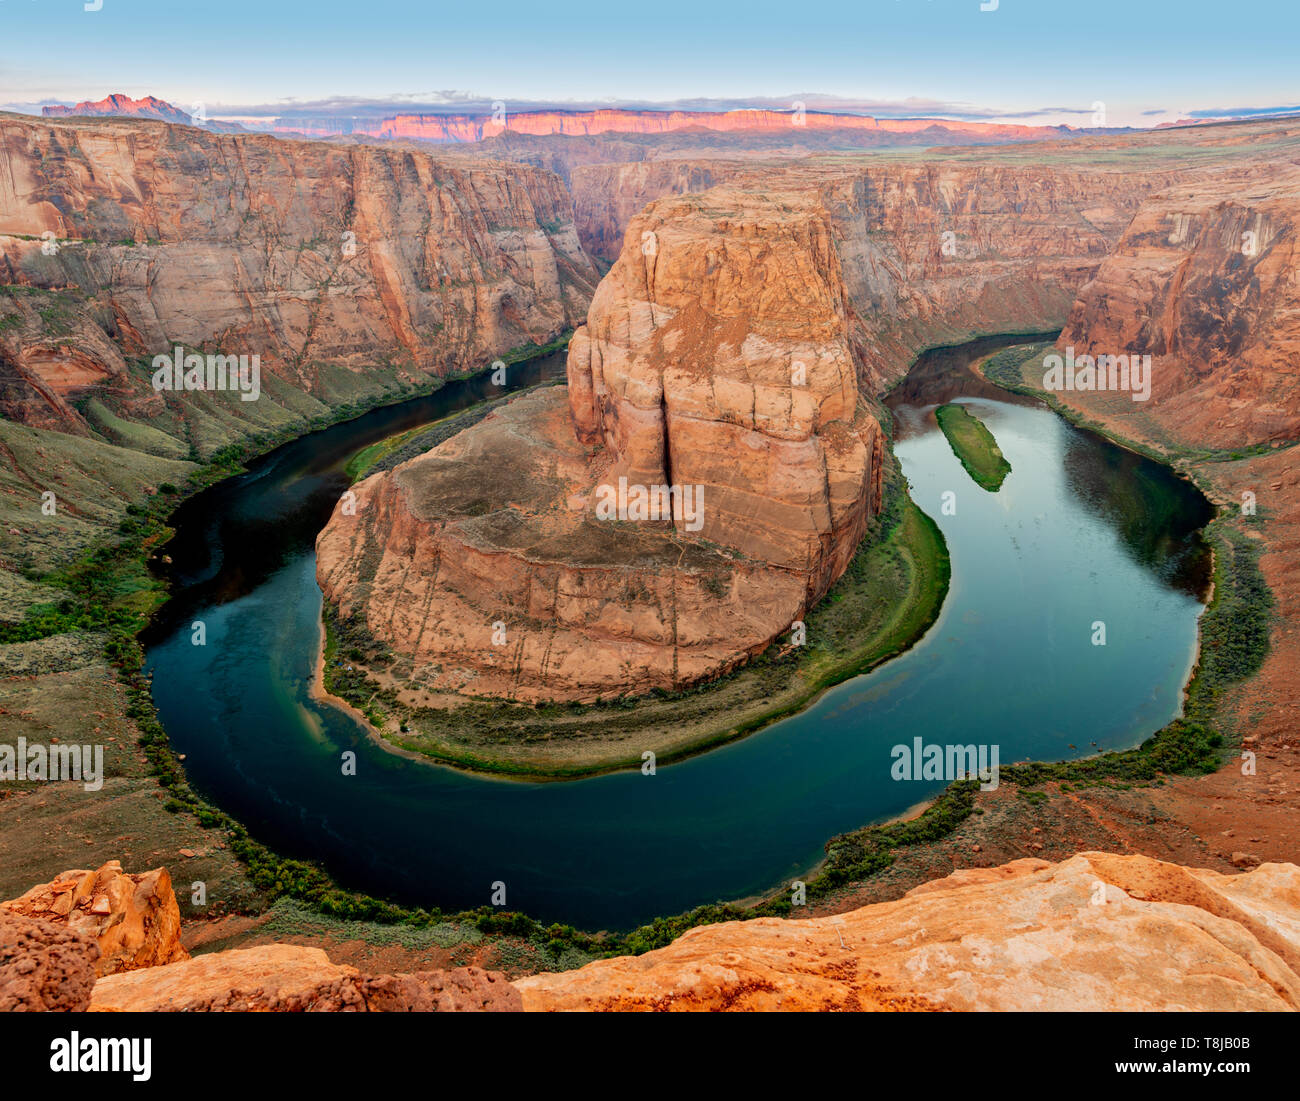 Horseshoe Bend Canyon and Colorado river in Page, Arizona, USA Stock Photo